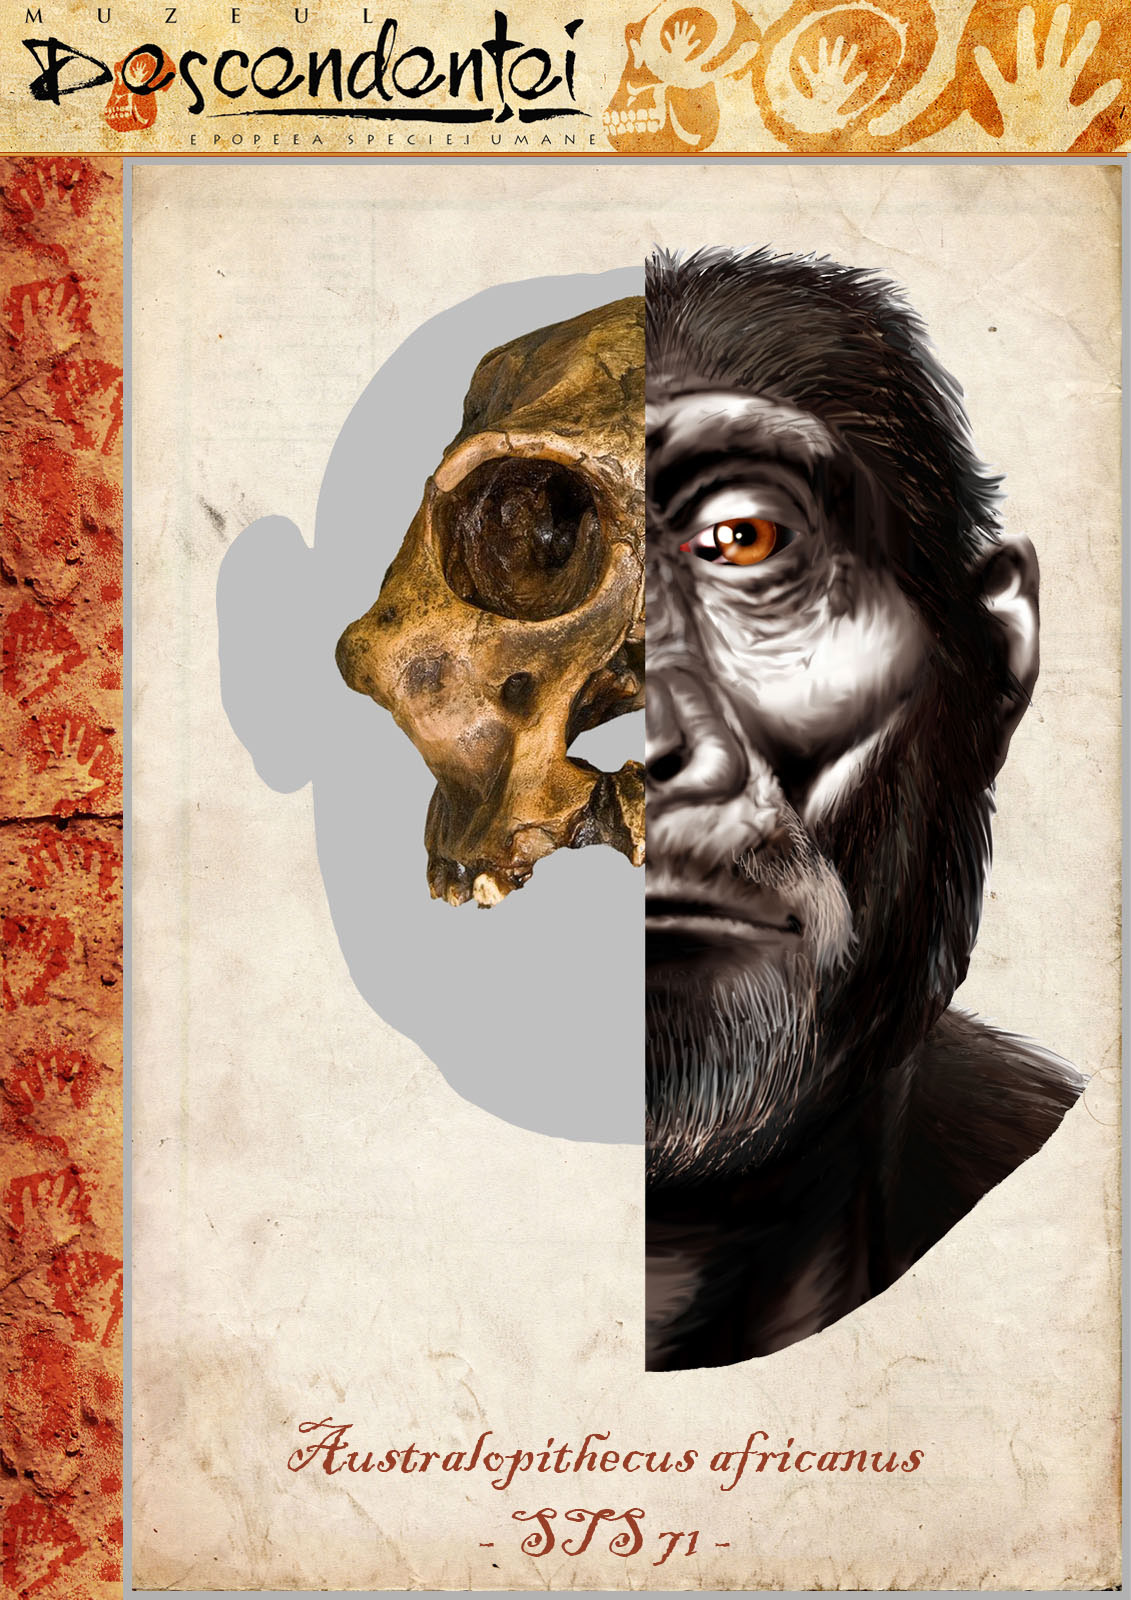 australopithecus africanus human evolution homo hominid sahelanthropus ardipithecus paranthropus neanderthal habilis erectus ergaster floresiensis heidelbergensis